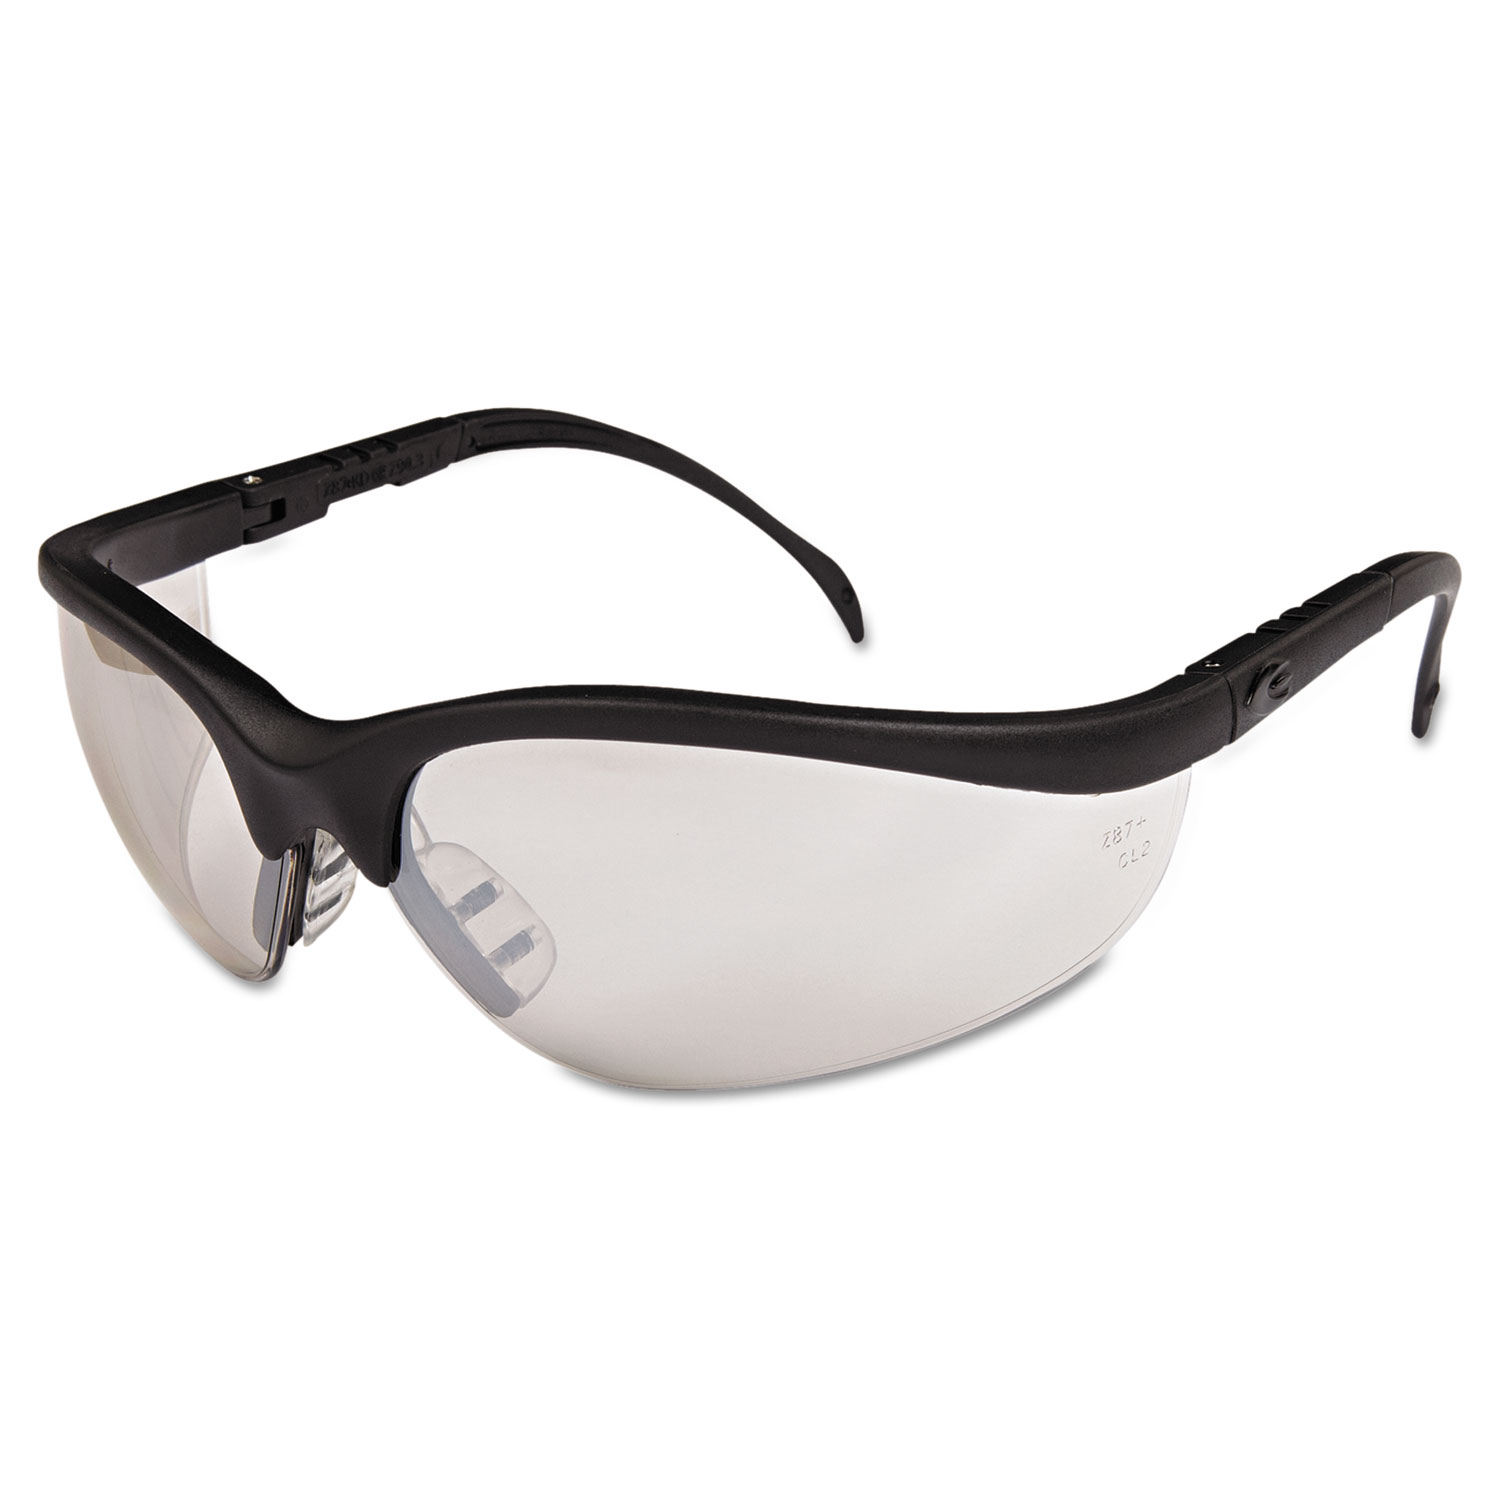  MCR Safety KD119 Klondike Safety Glasses, Black Matte Frame, Clear Mirror Lens (CRWKD119BX) 